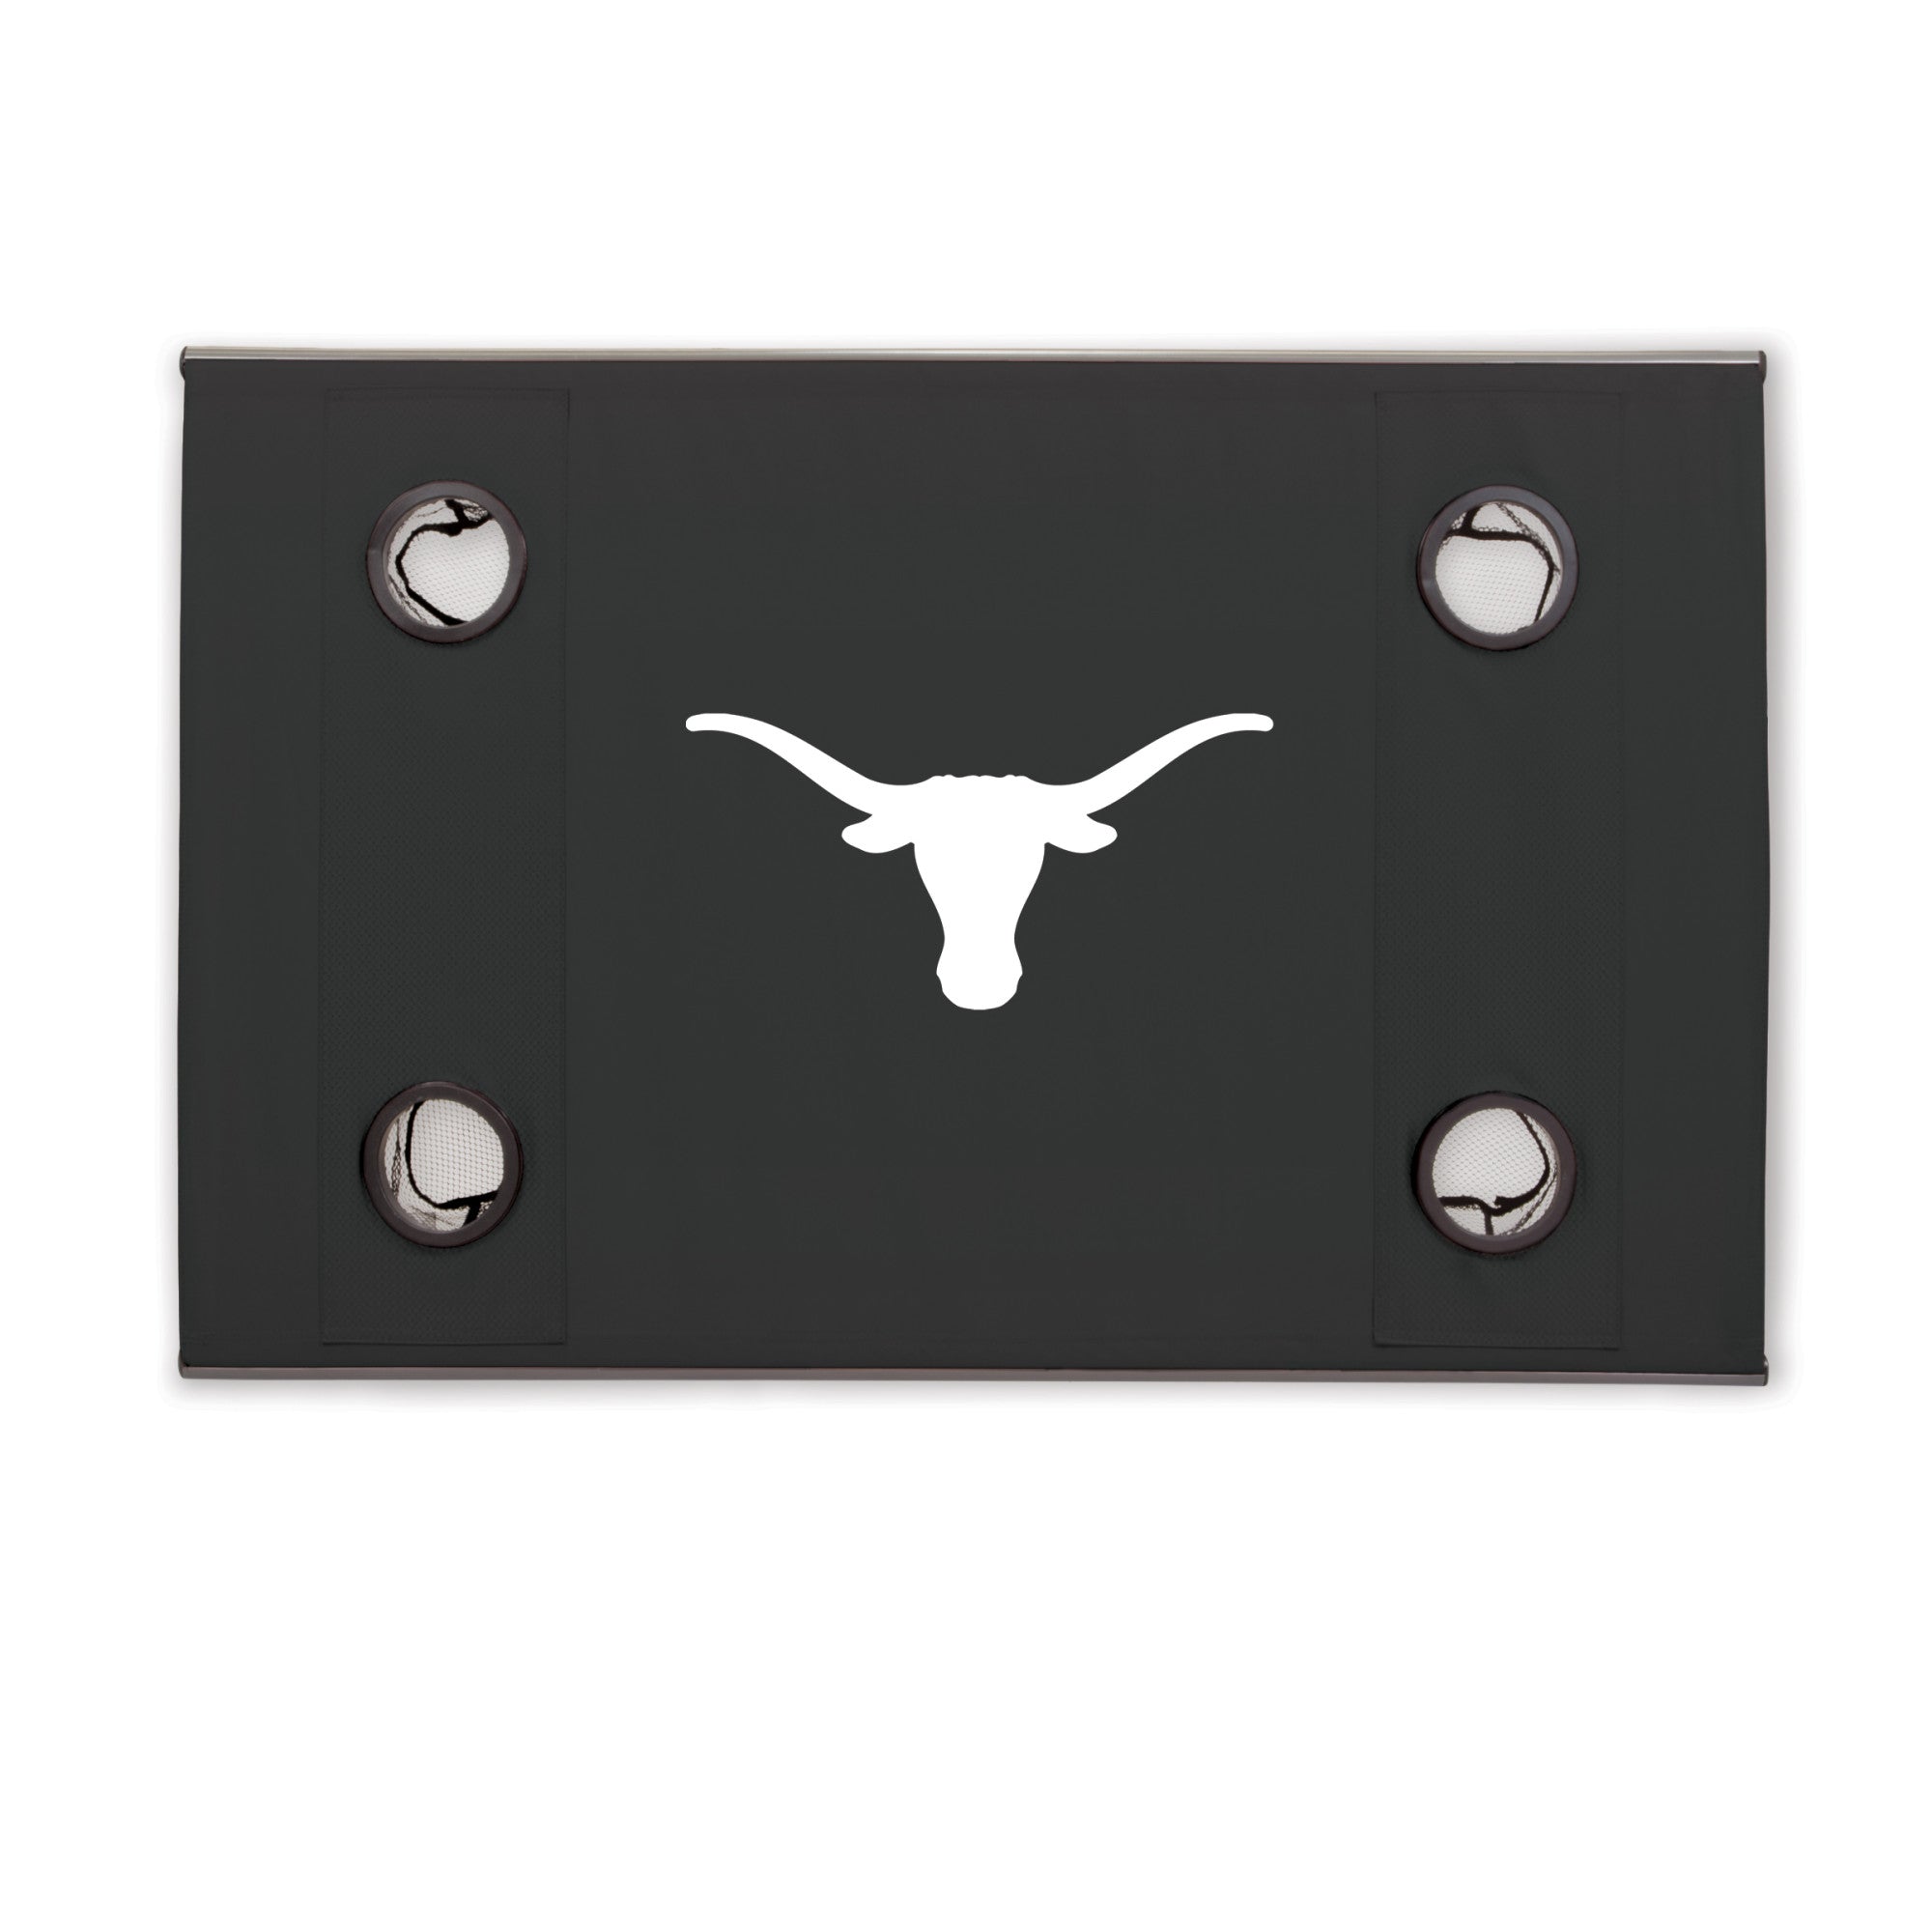 Texas Longhorns - Travel Table Portable Folding Table